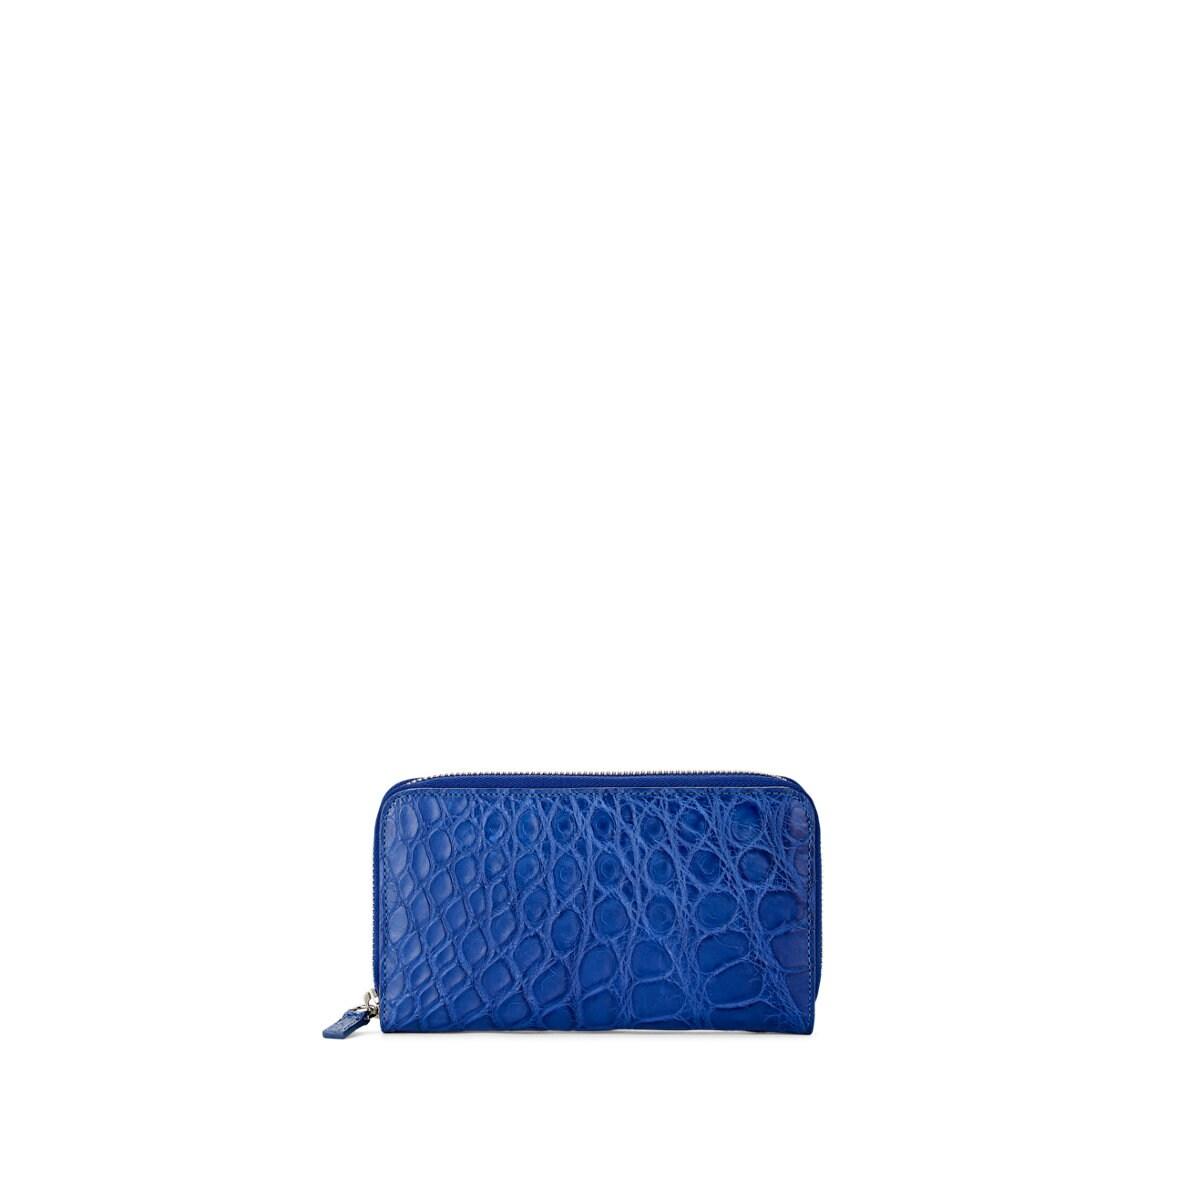 Barneys New York Leather Alligator Zip-around Wallet in Blue for Men - Lyst